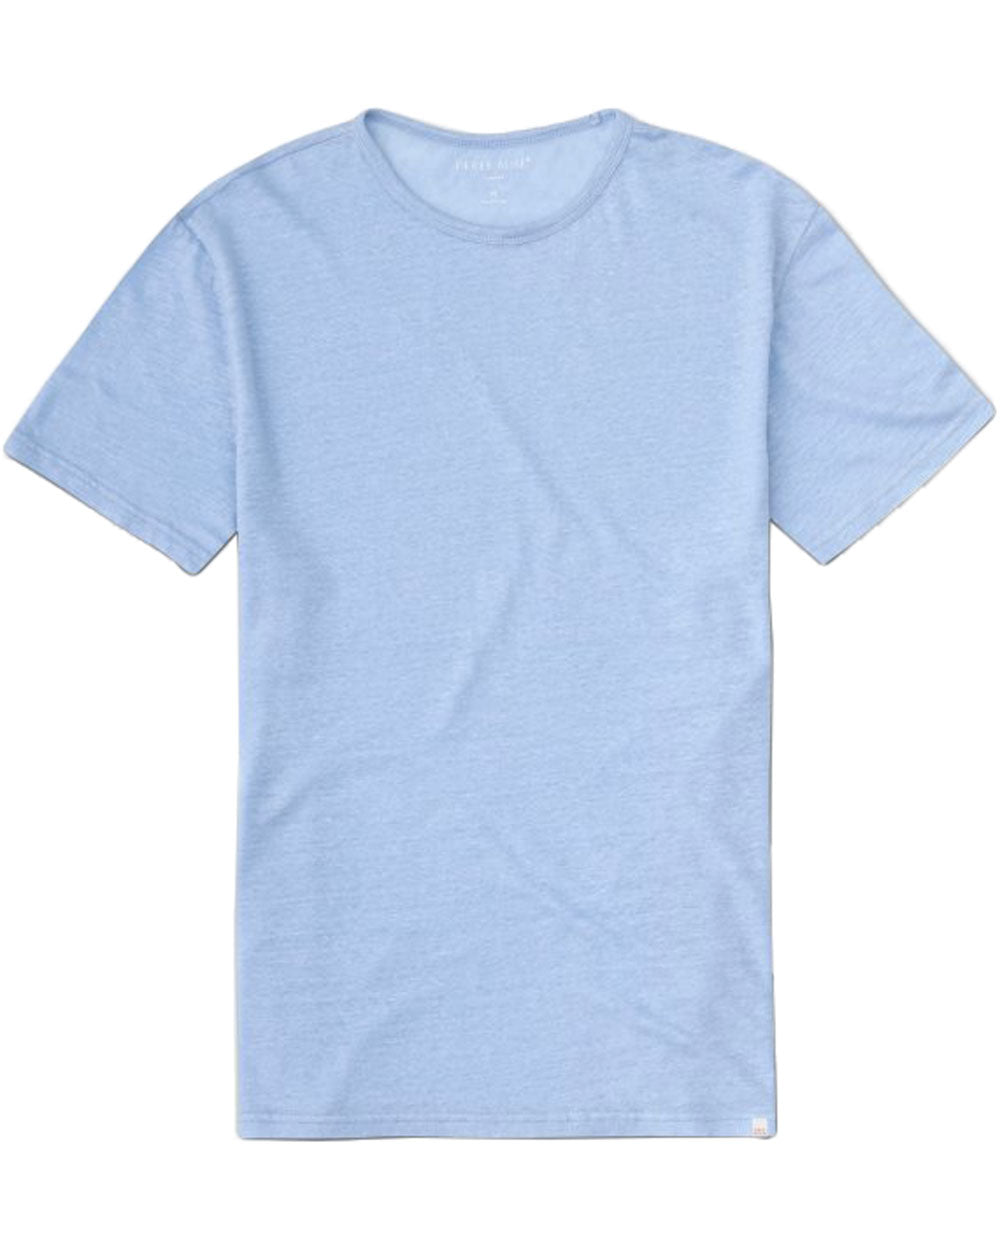 Jordan 2 Linen Short Sleeve T-Shirt in Sky